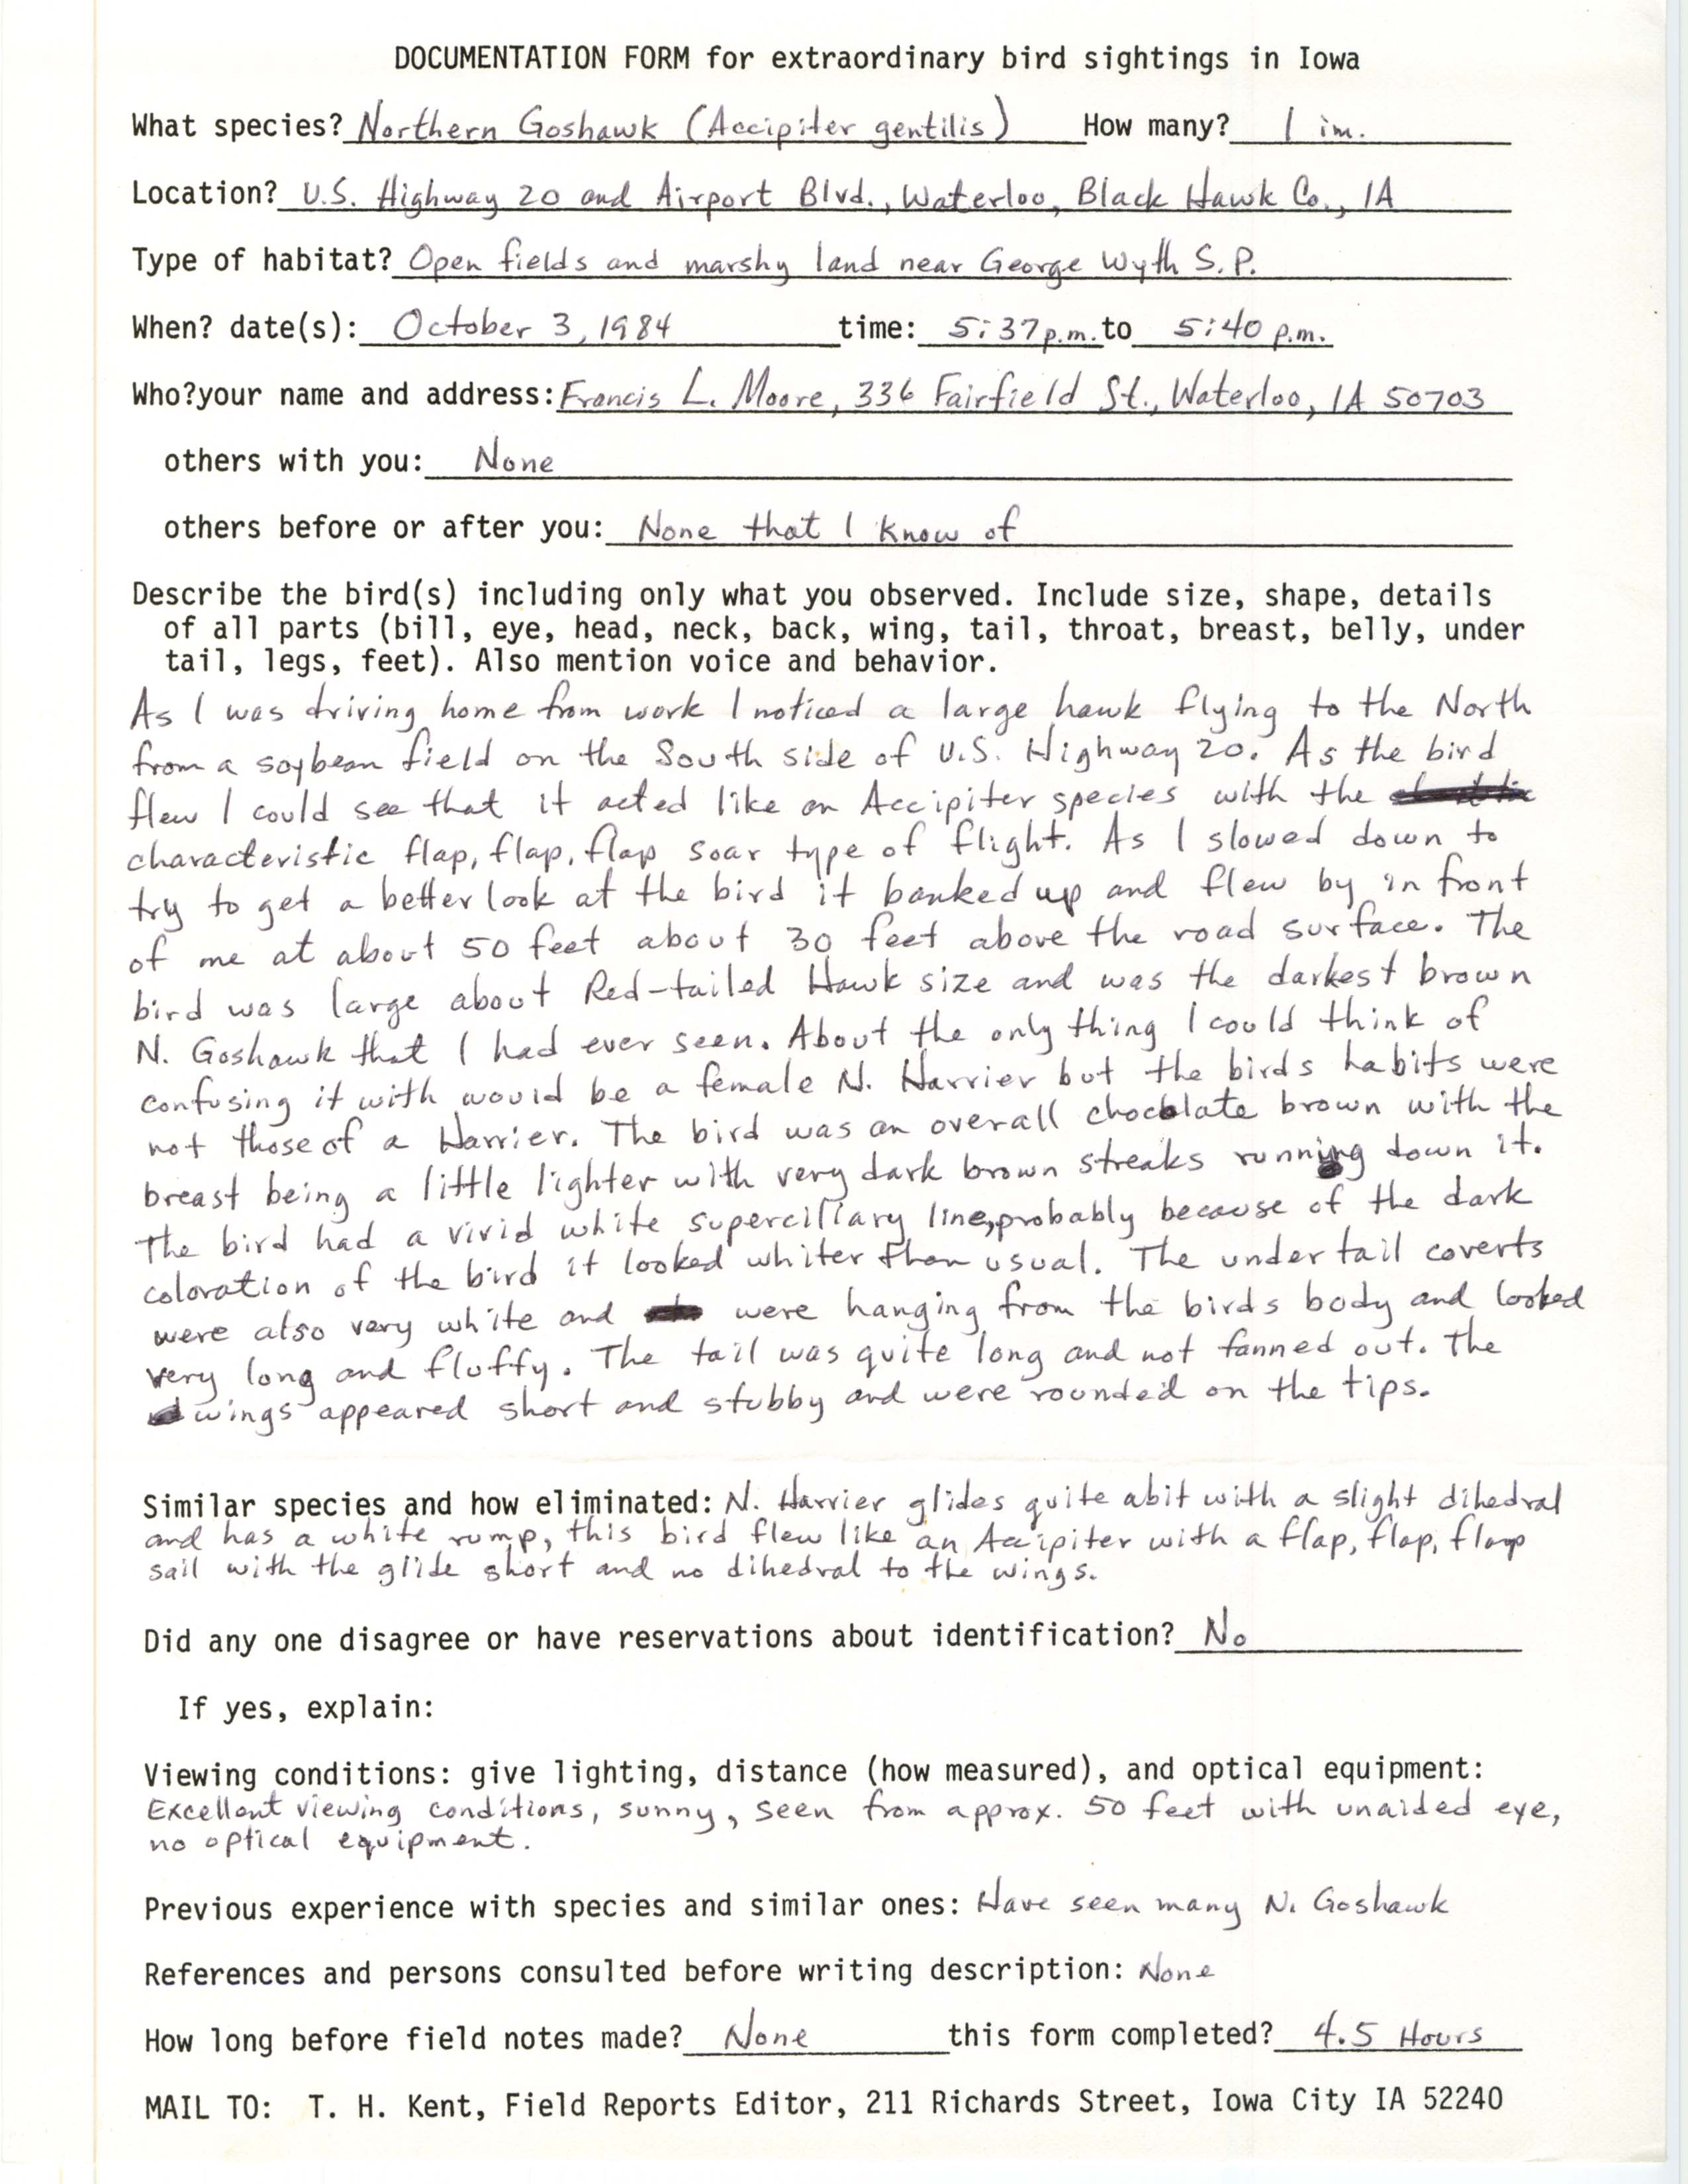 Rare bird documentation form for Northern Goshawk at Waterloo, 1984